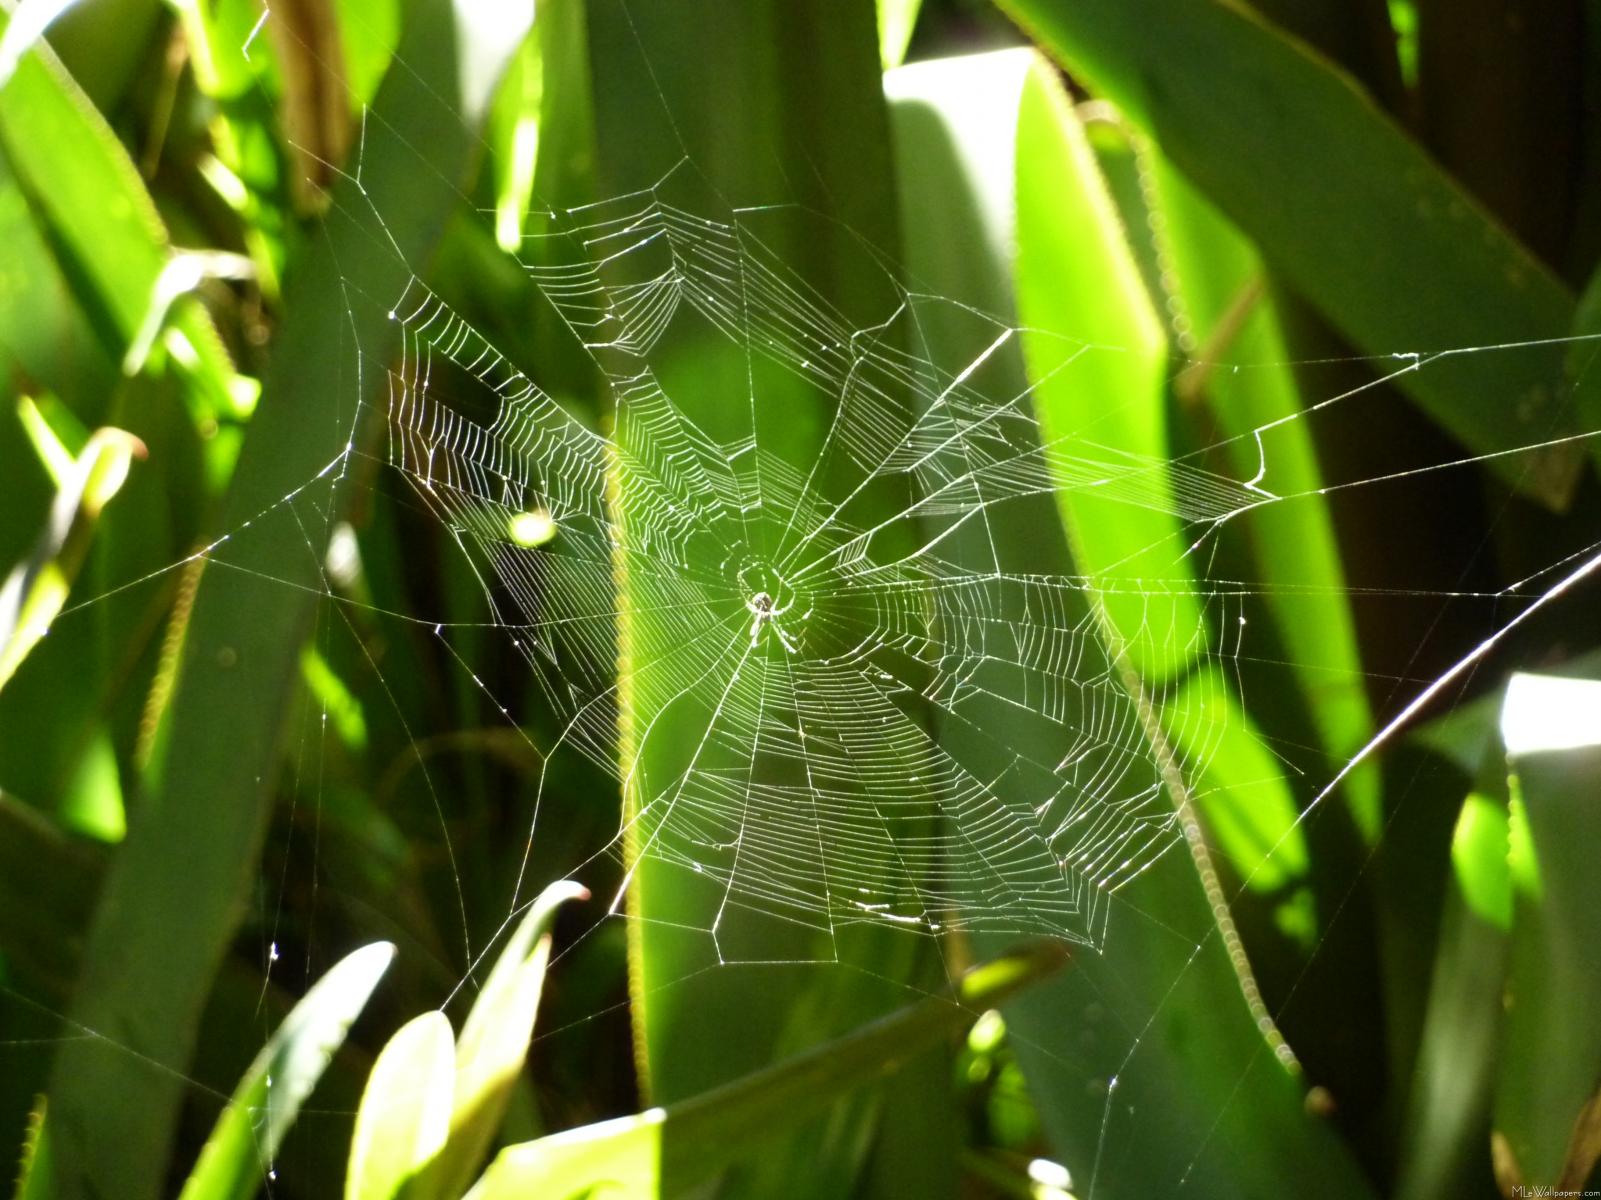 MLeWallpaperscom   Spiderweb in Tropical Leaves